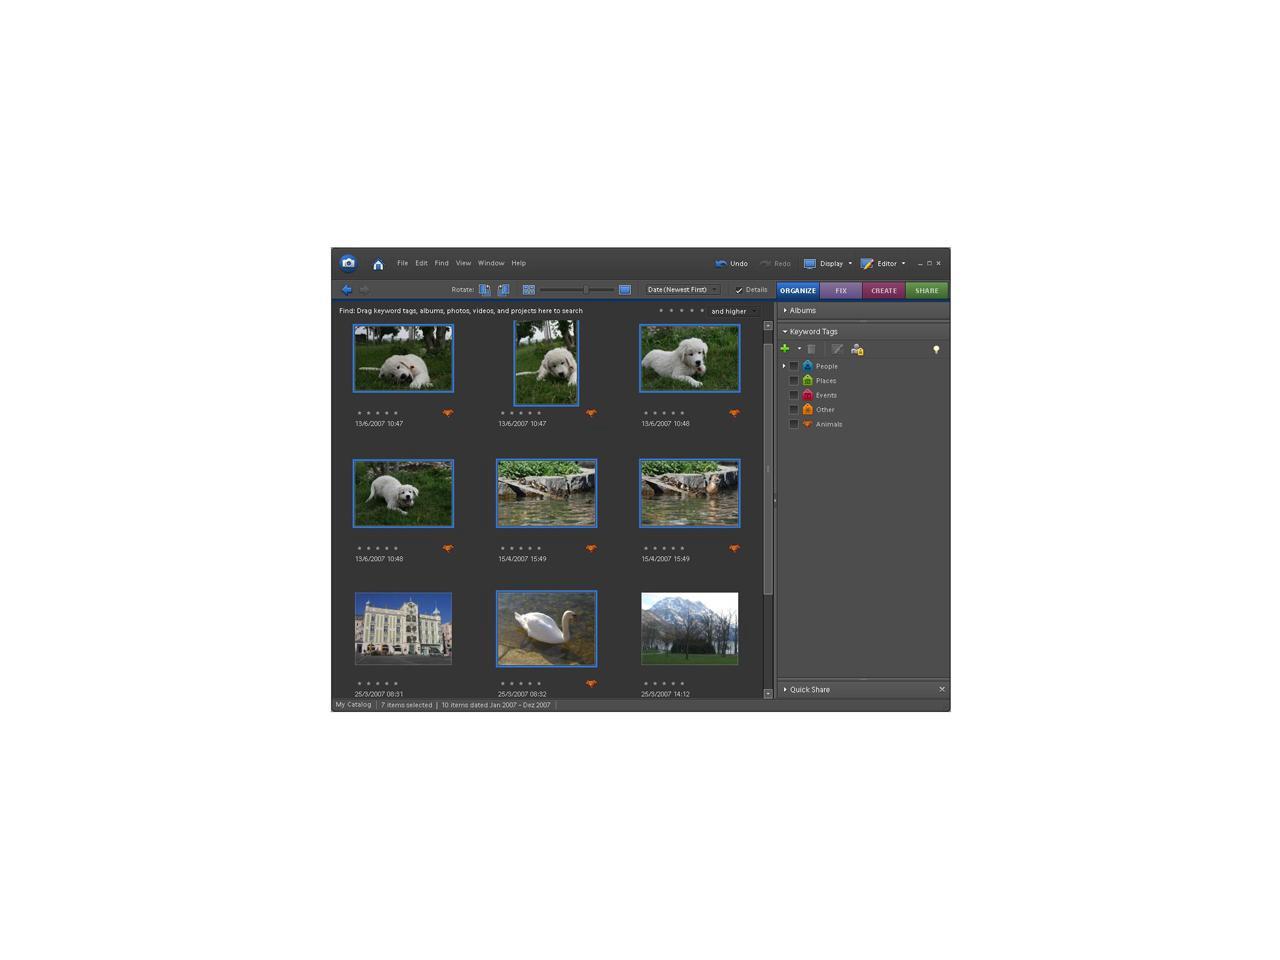 adobe photoshop elements 6 download windows